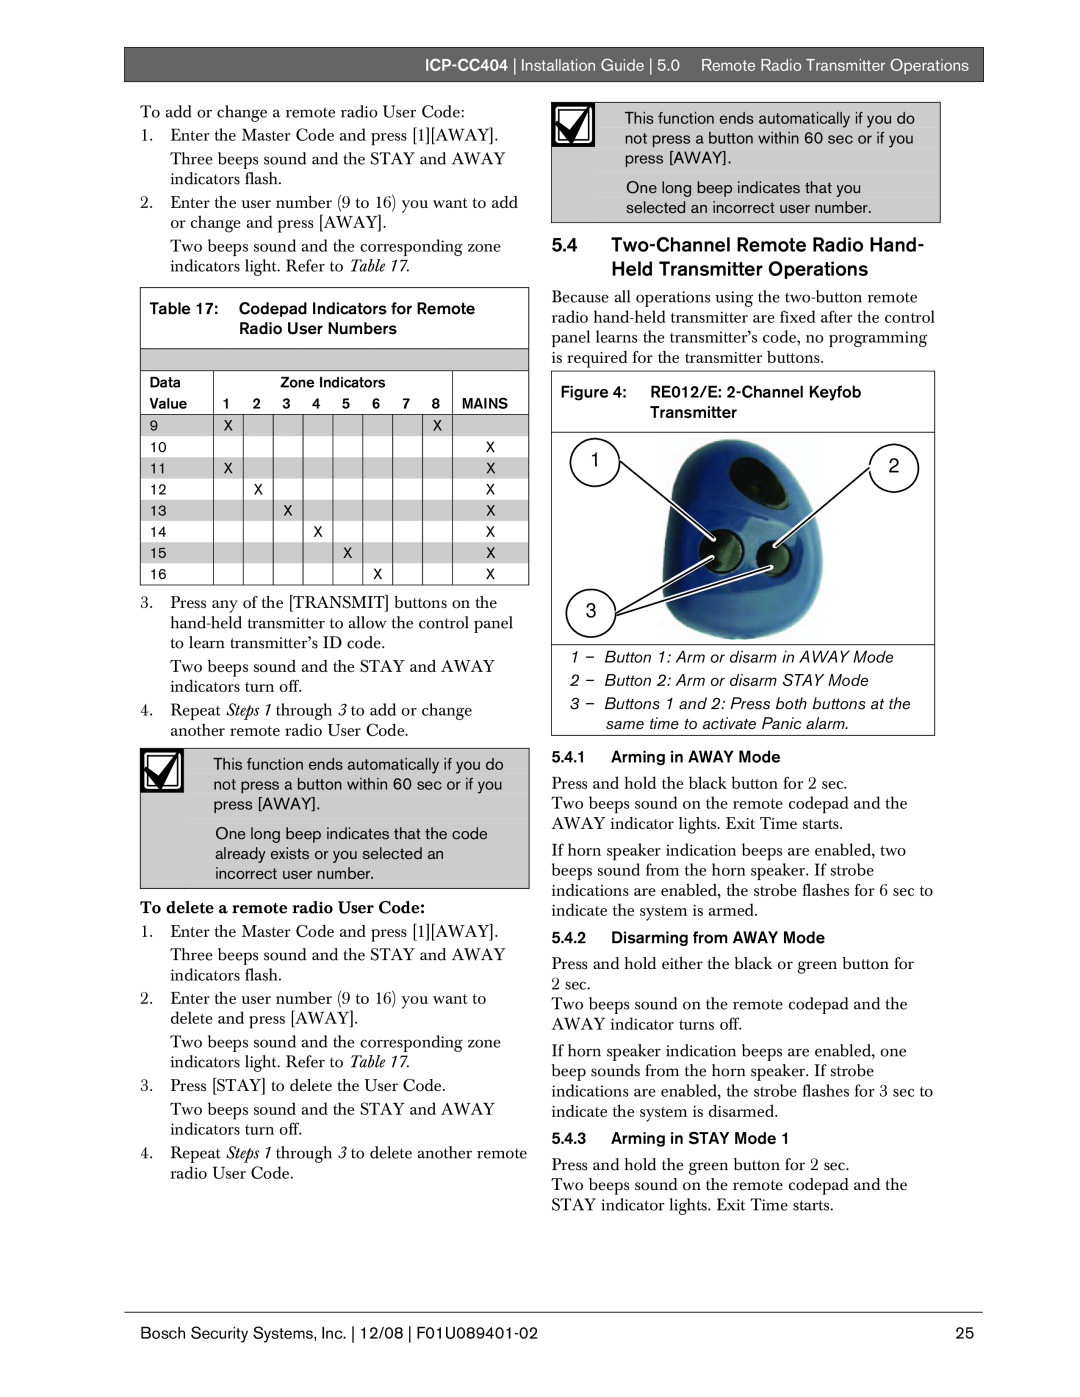 Bosch Appliances ICP-CC404 manual 